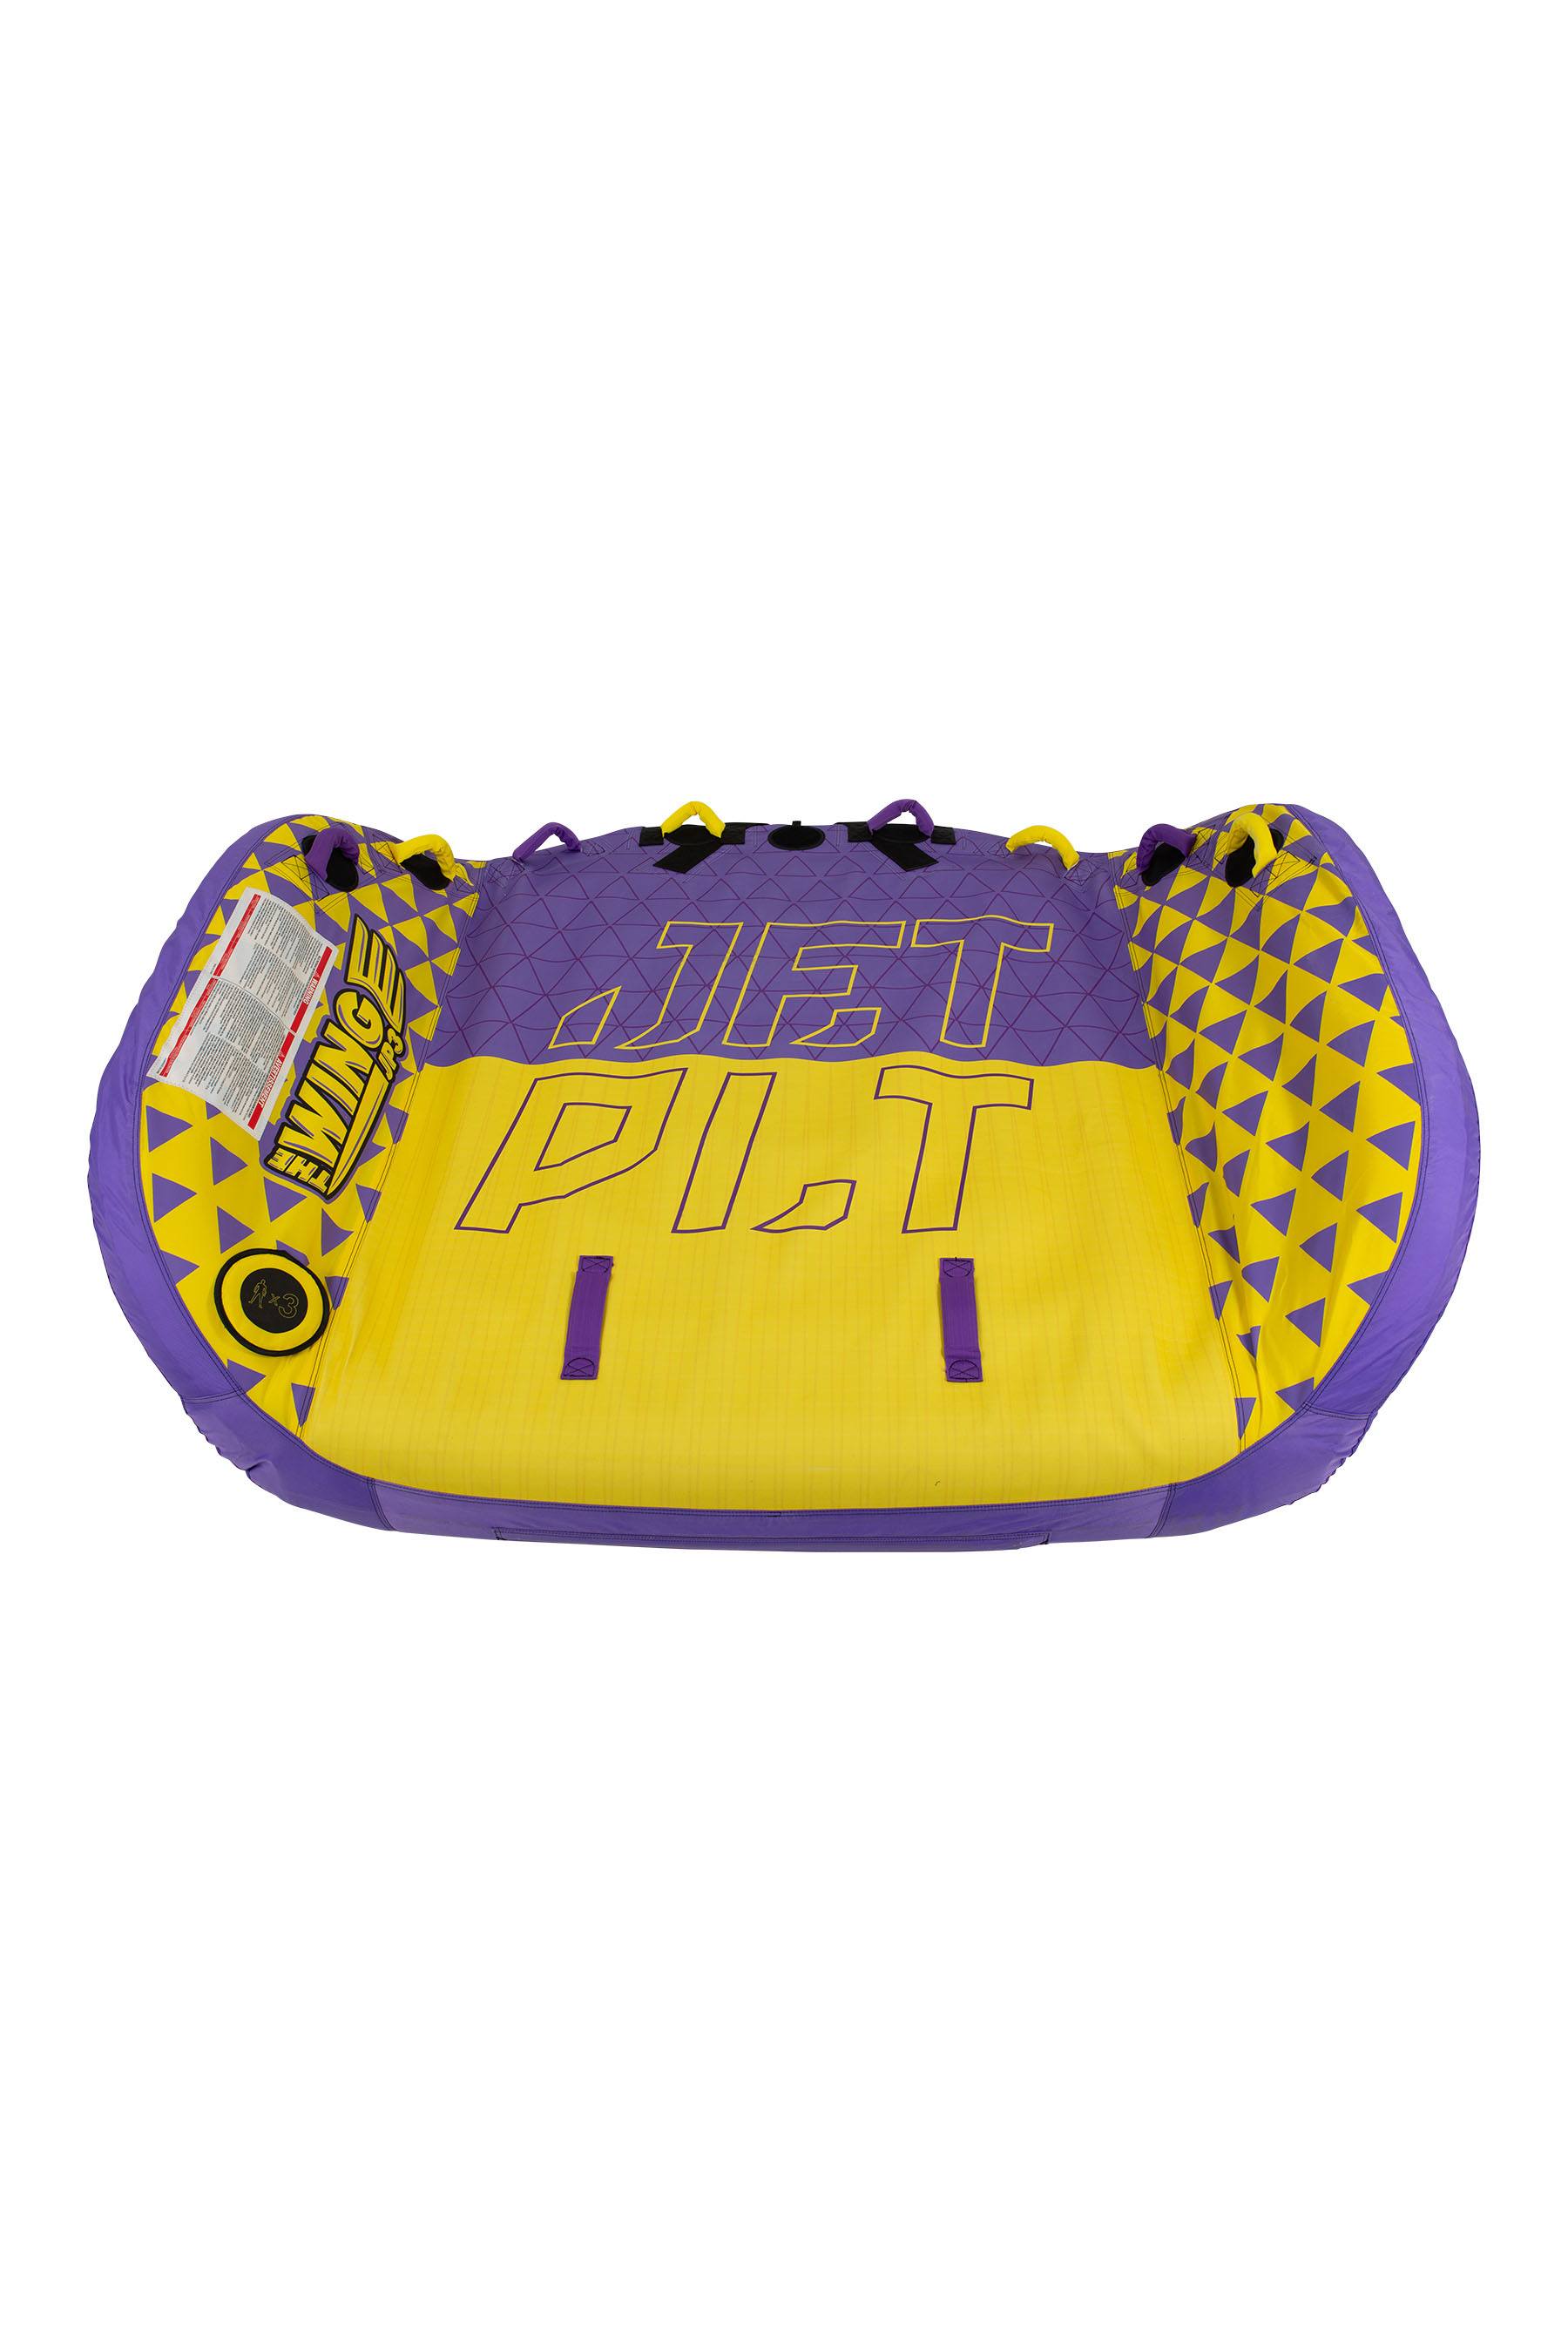 Jetpilot JP3 Wing Towable - Yellow/Purple 3